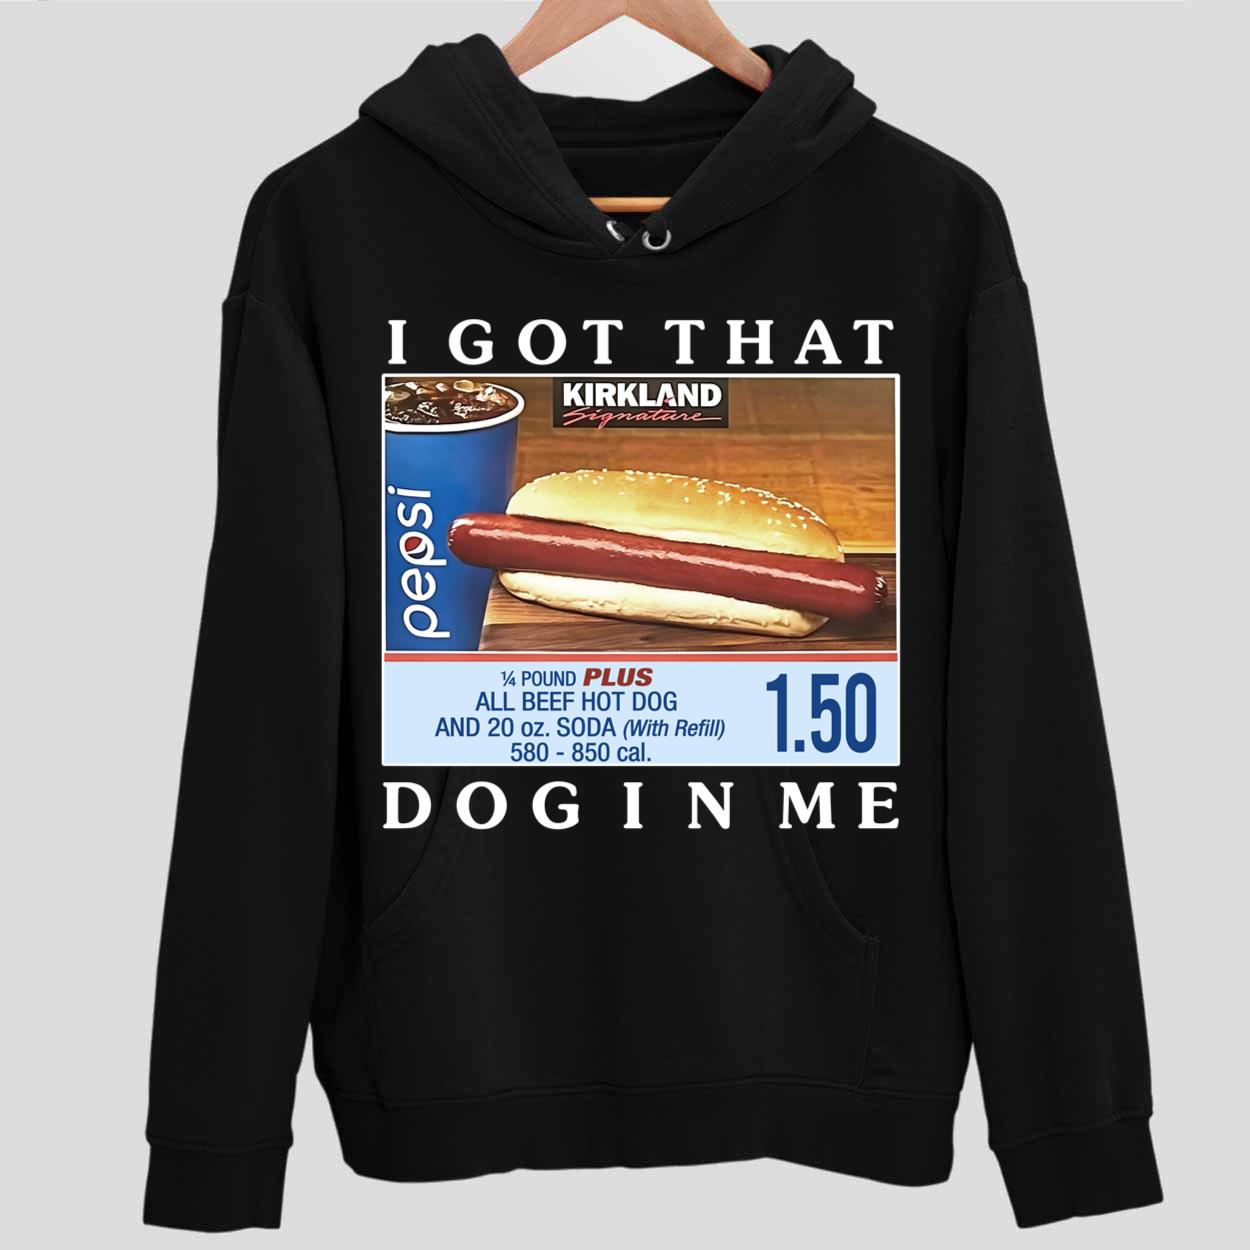 Costco-Hot-Dog-Combo-I-Got-That-Dog-In-Me-Shirt_2_1.jpg